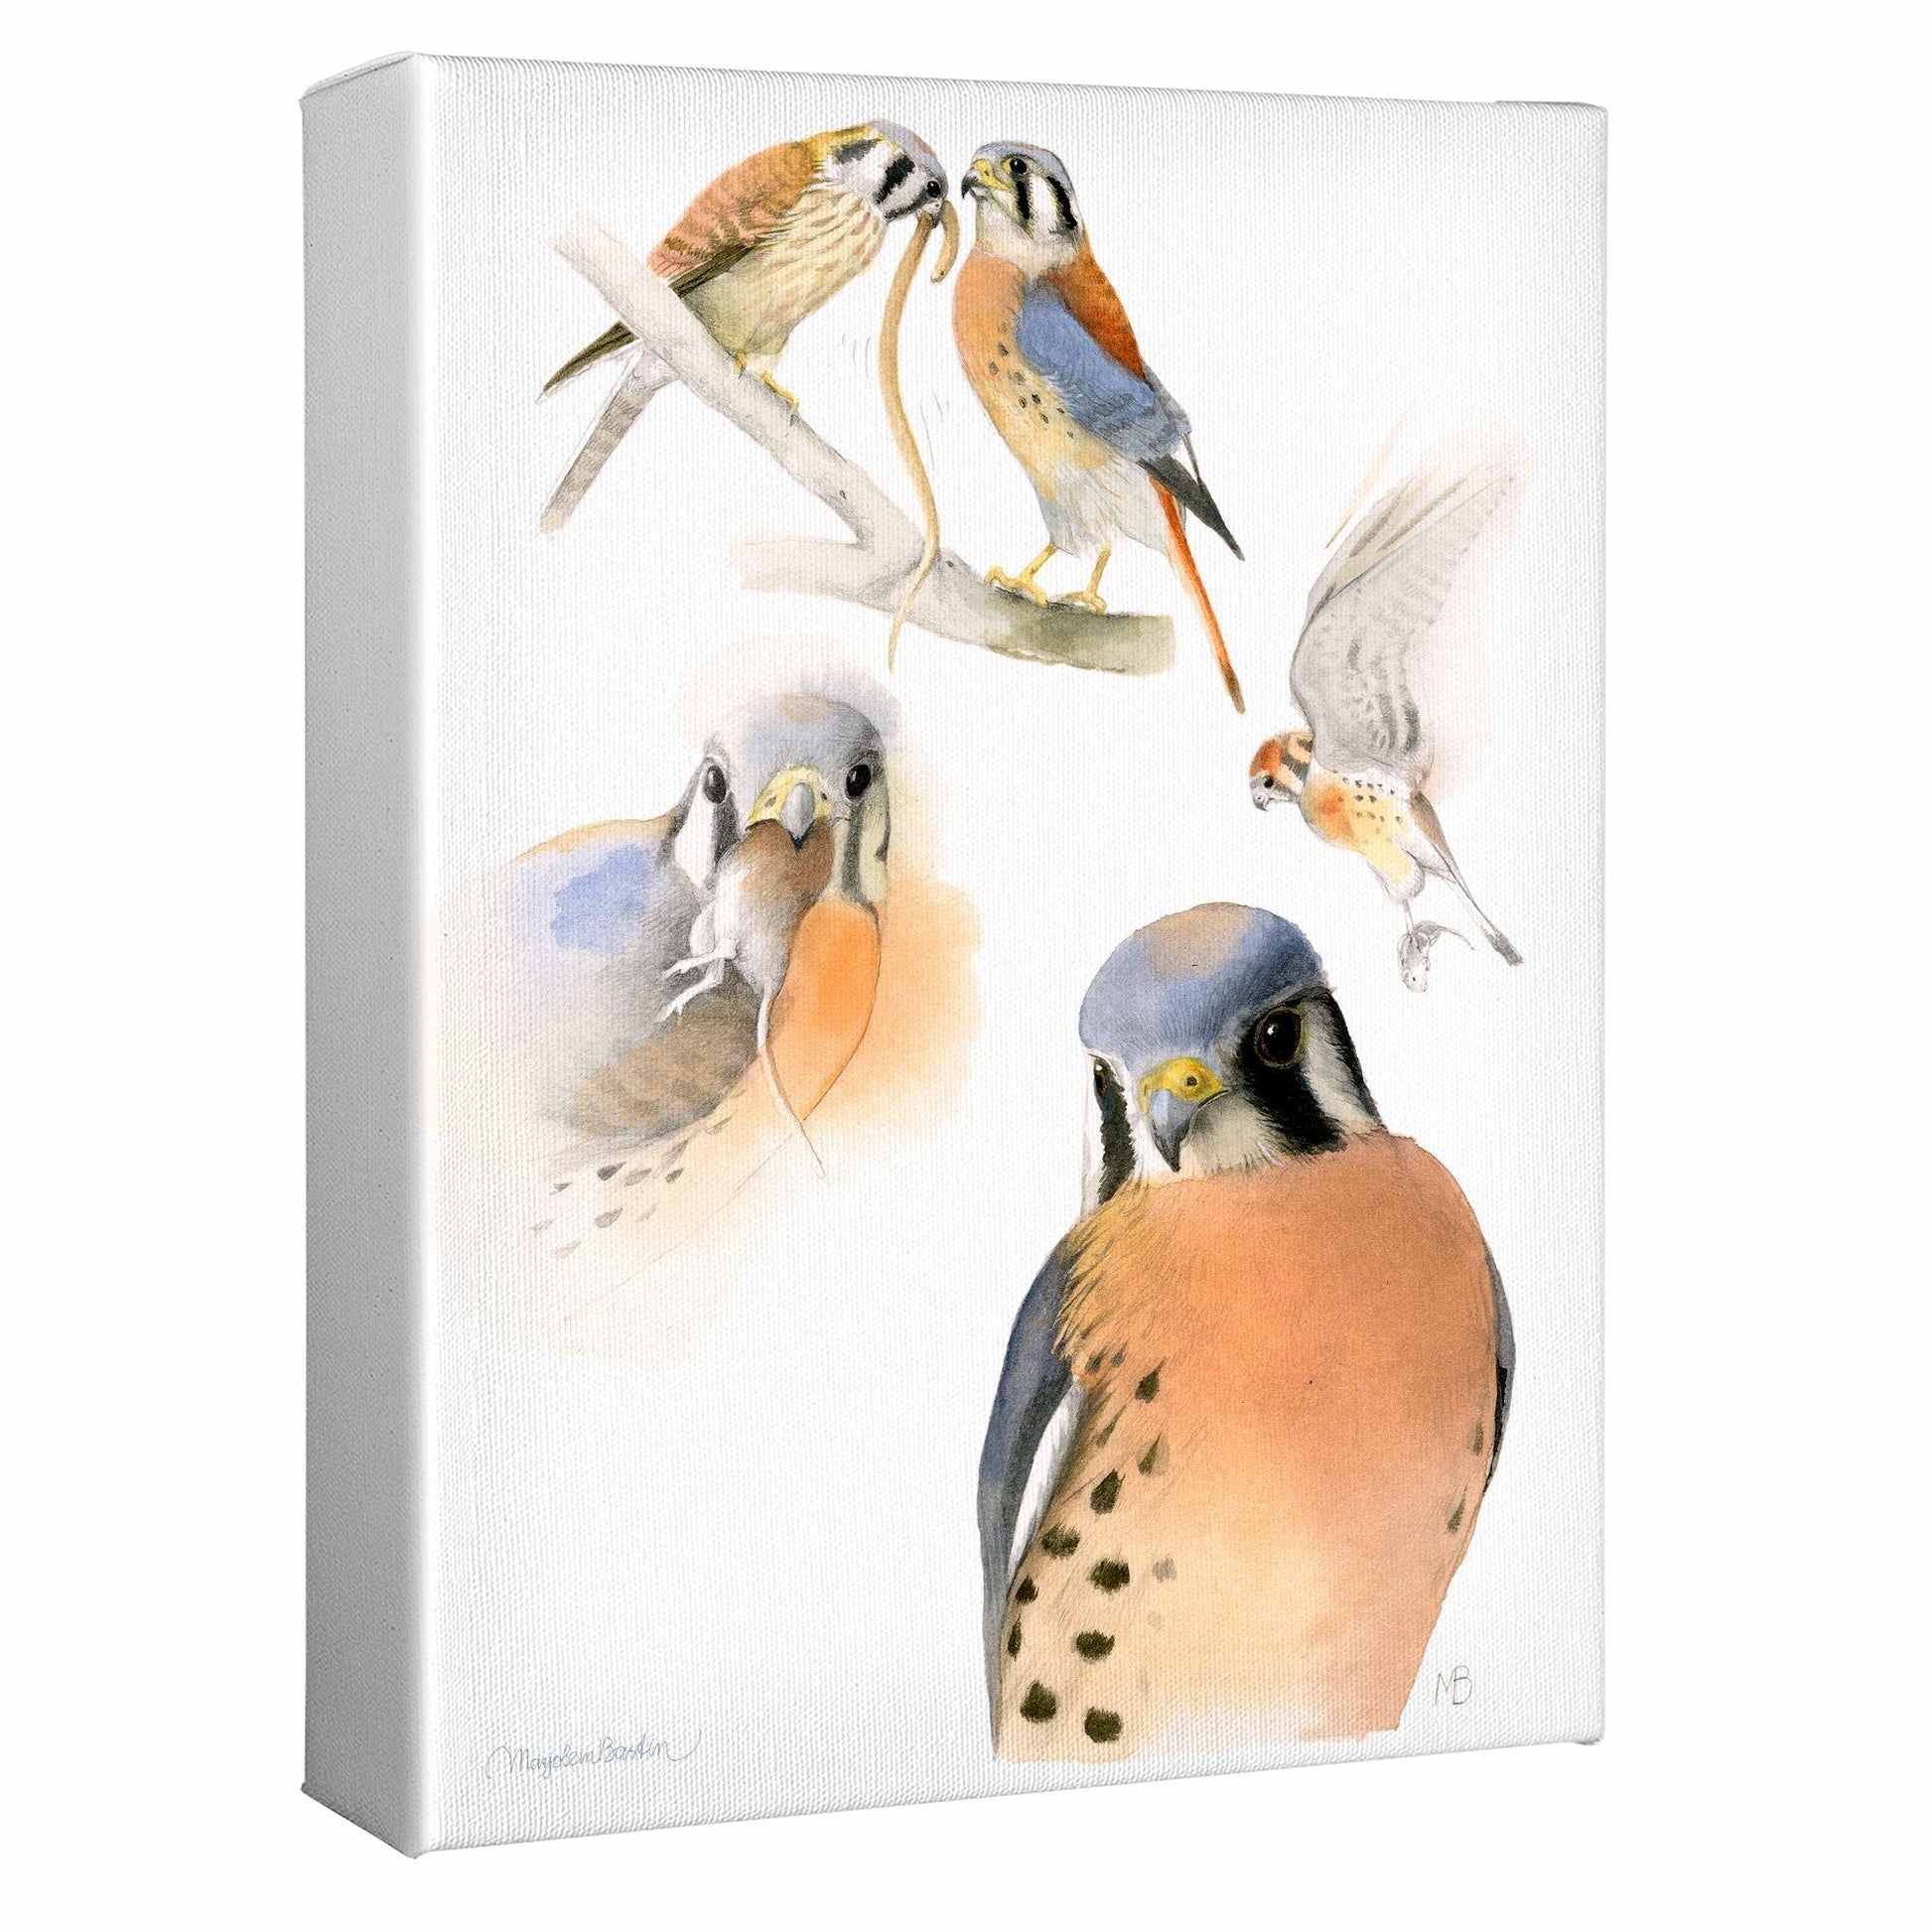 American Kestrel Gallery Wrapped Canvas - Wild Wings